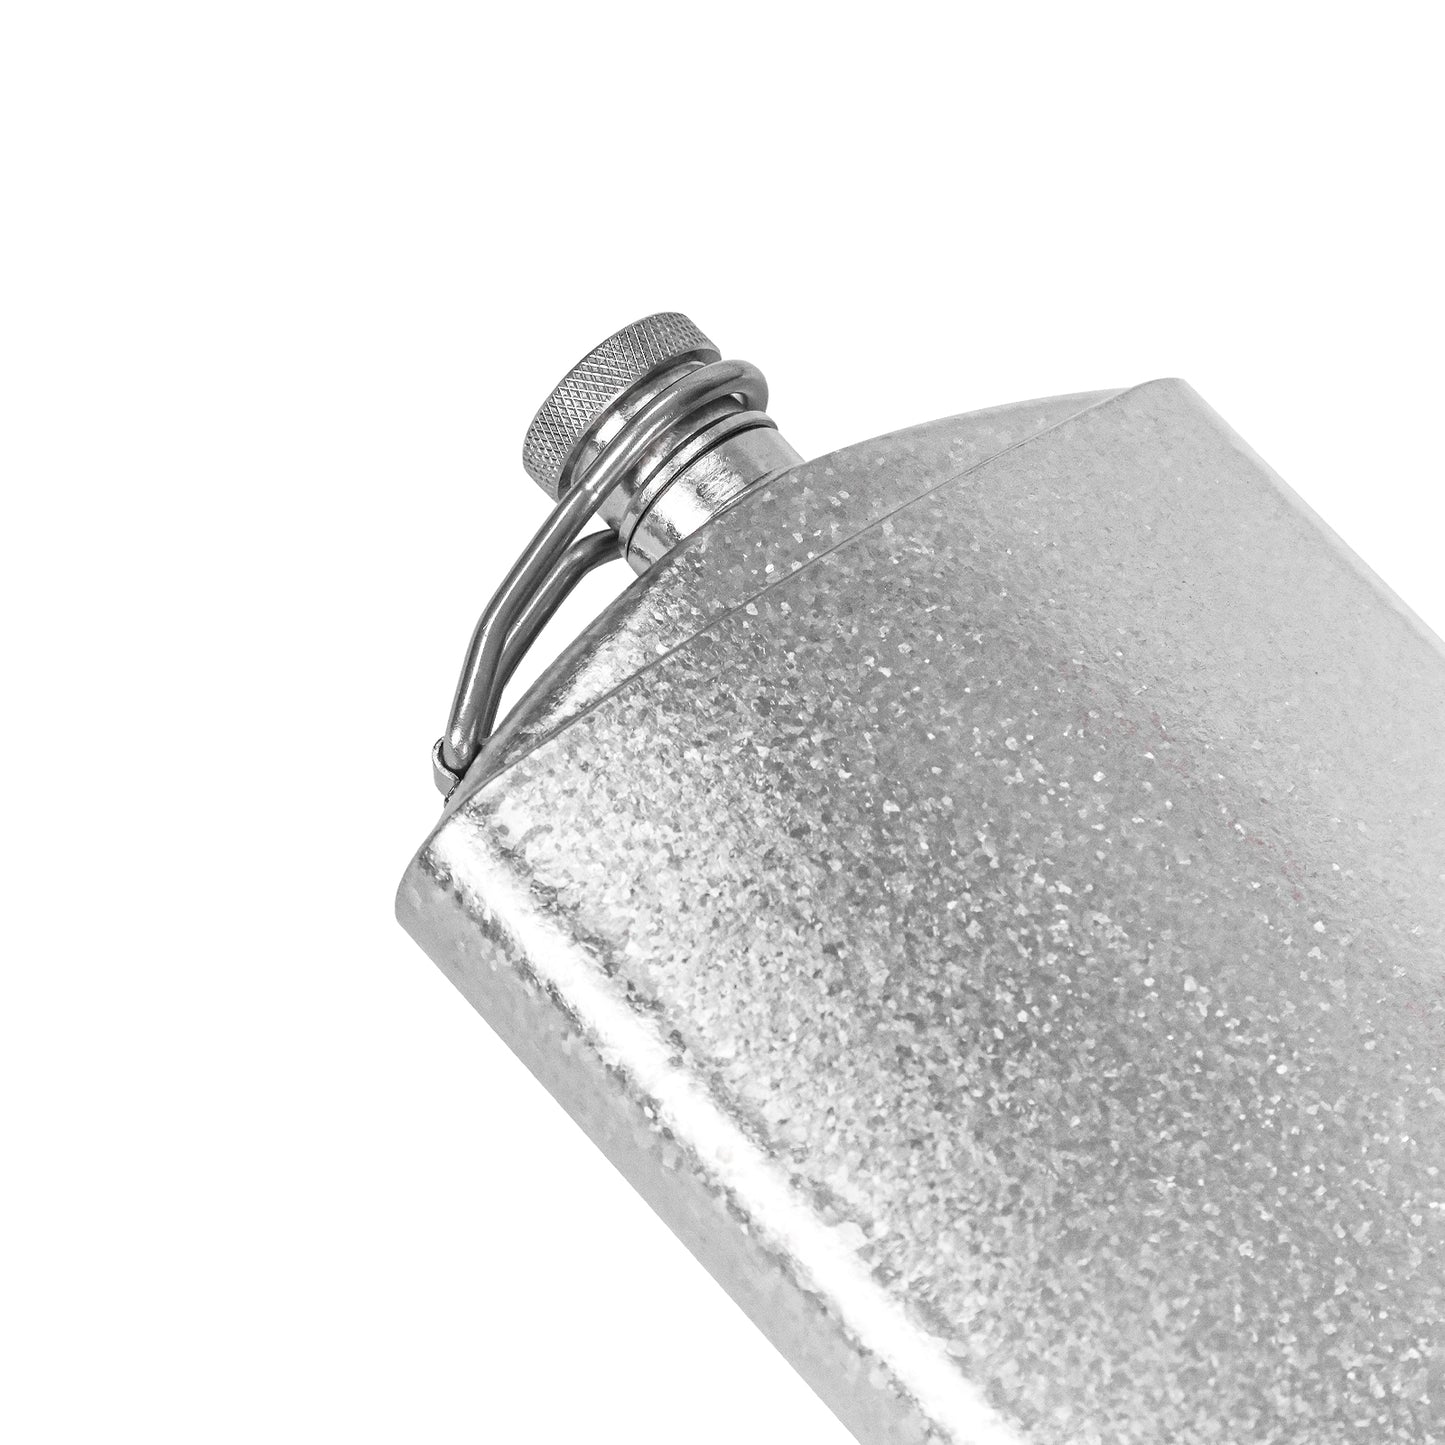 
                  
                    SilverAnt Titanium Hip Flask and Funnel 248ml/8.73 fl oz - the lid
                  
                